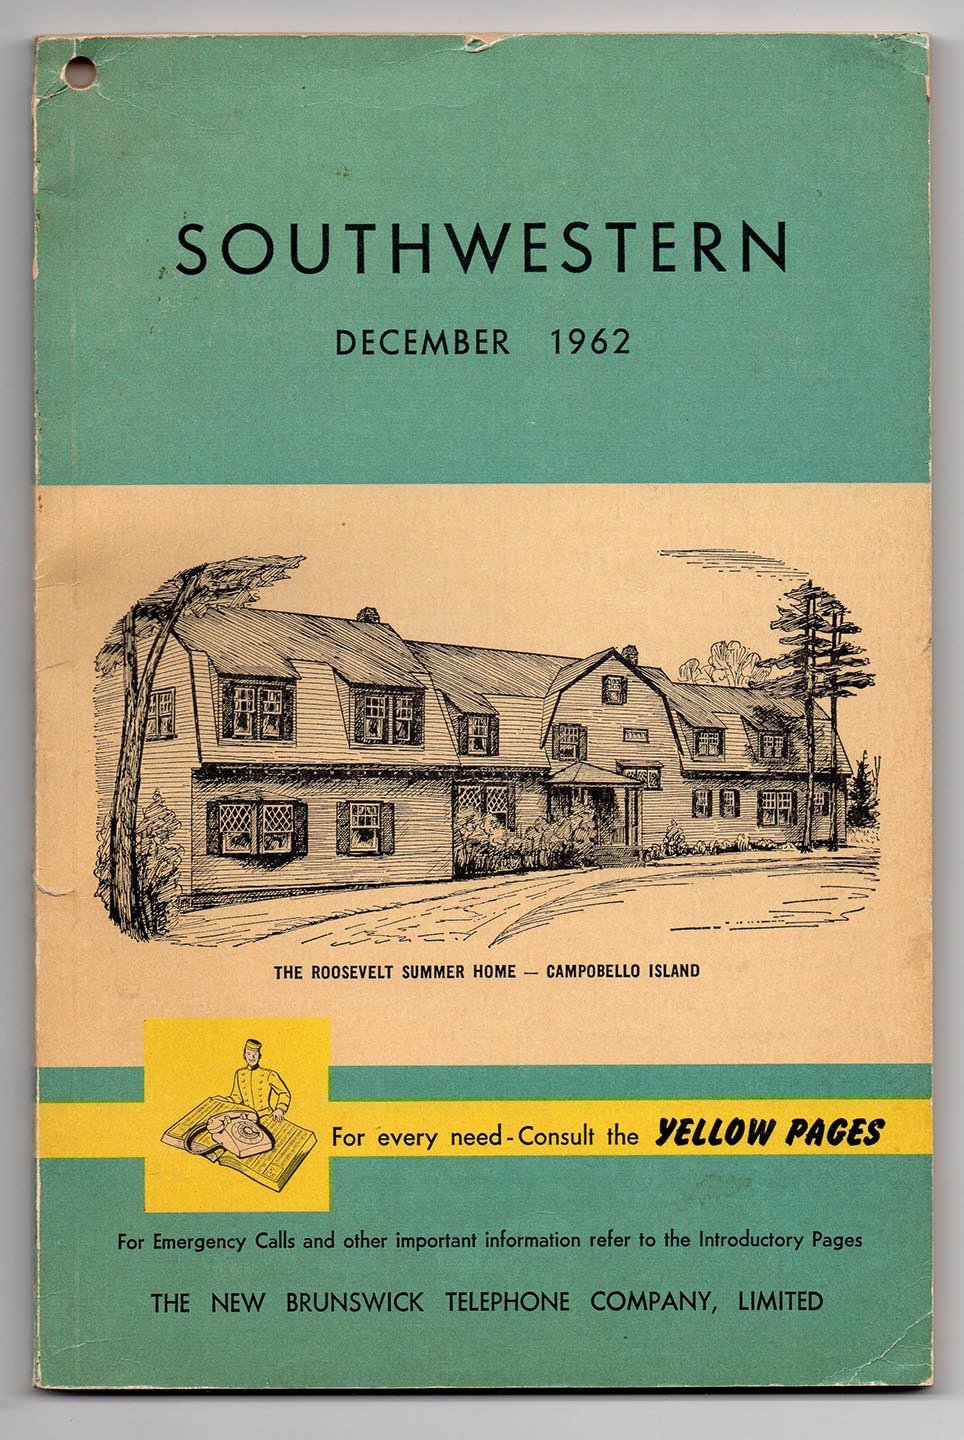 Southwestern New Brunswick telephone book, December 1962